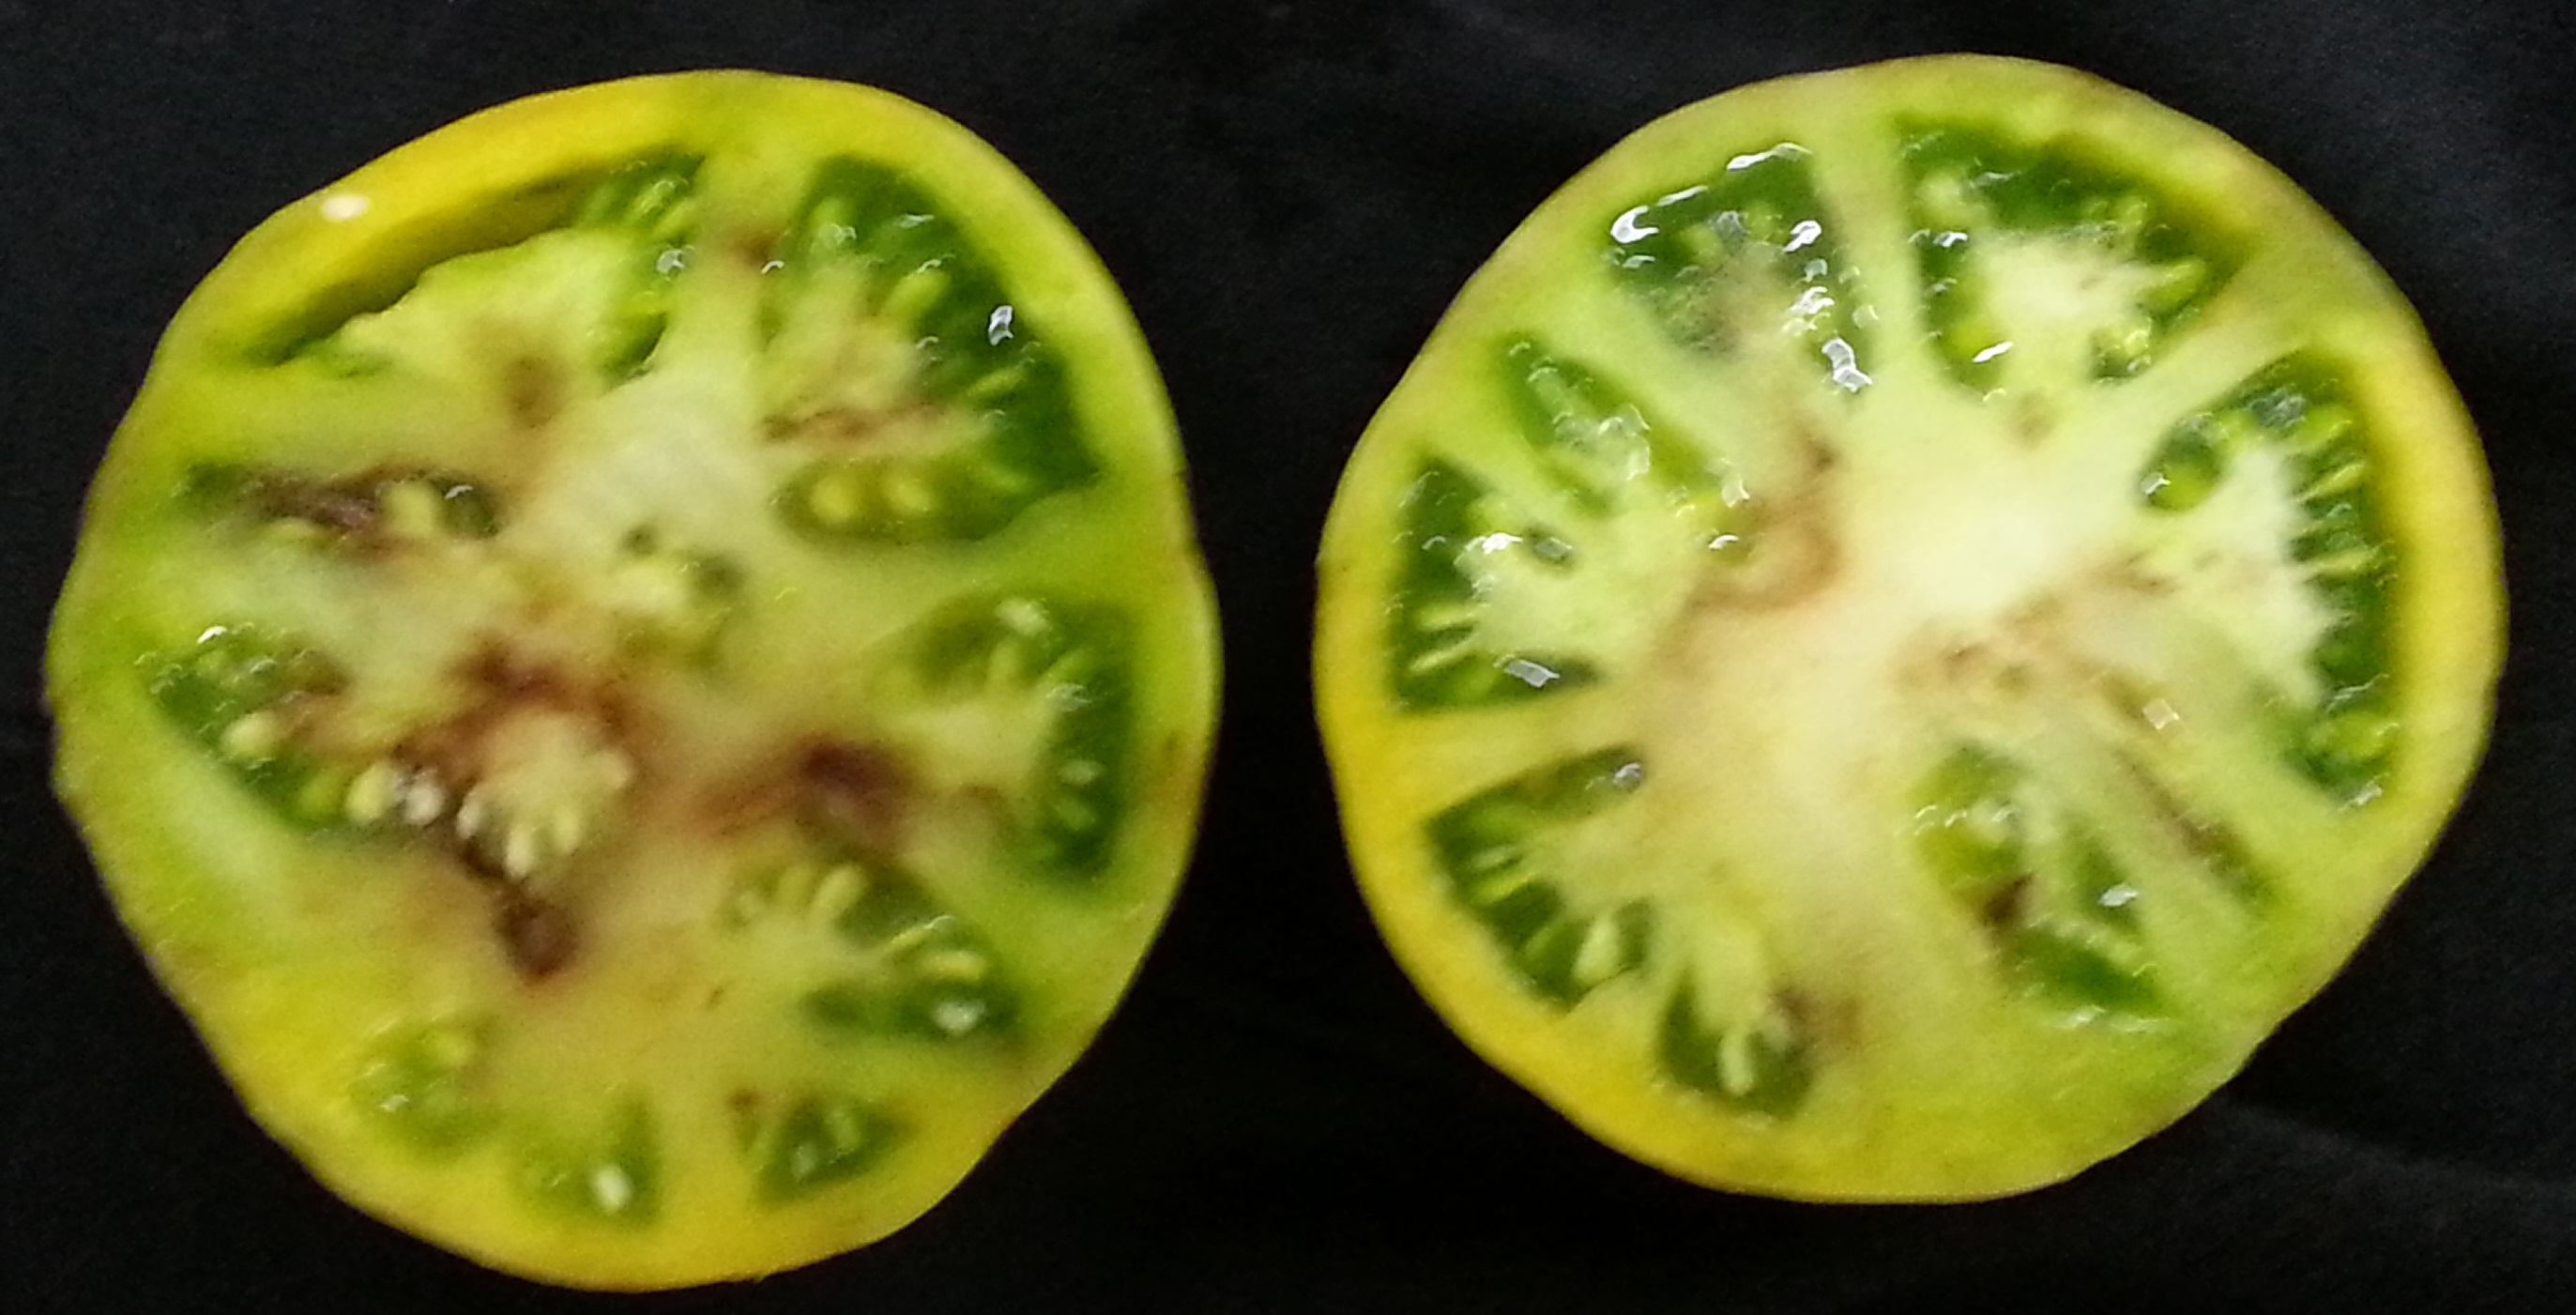 Spotted Wilt Virus in Tomato